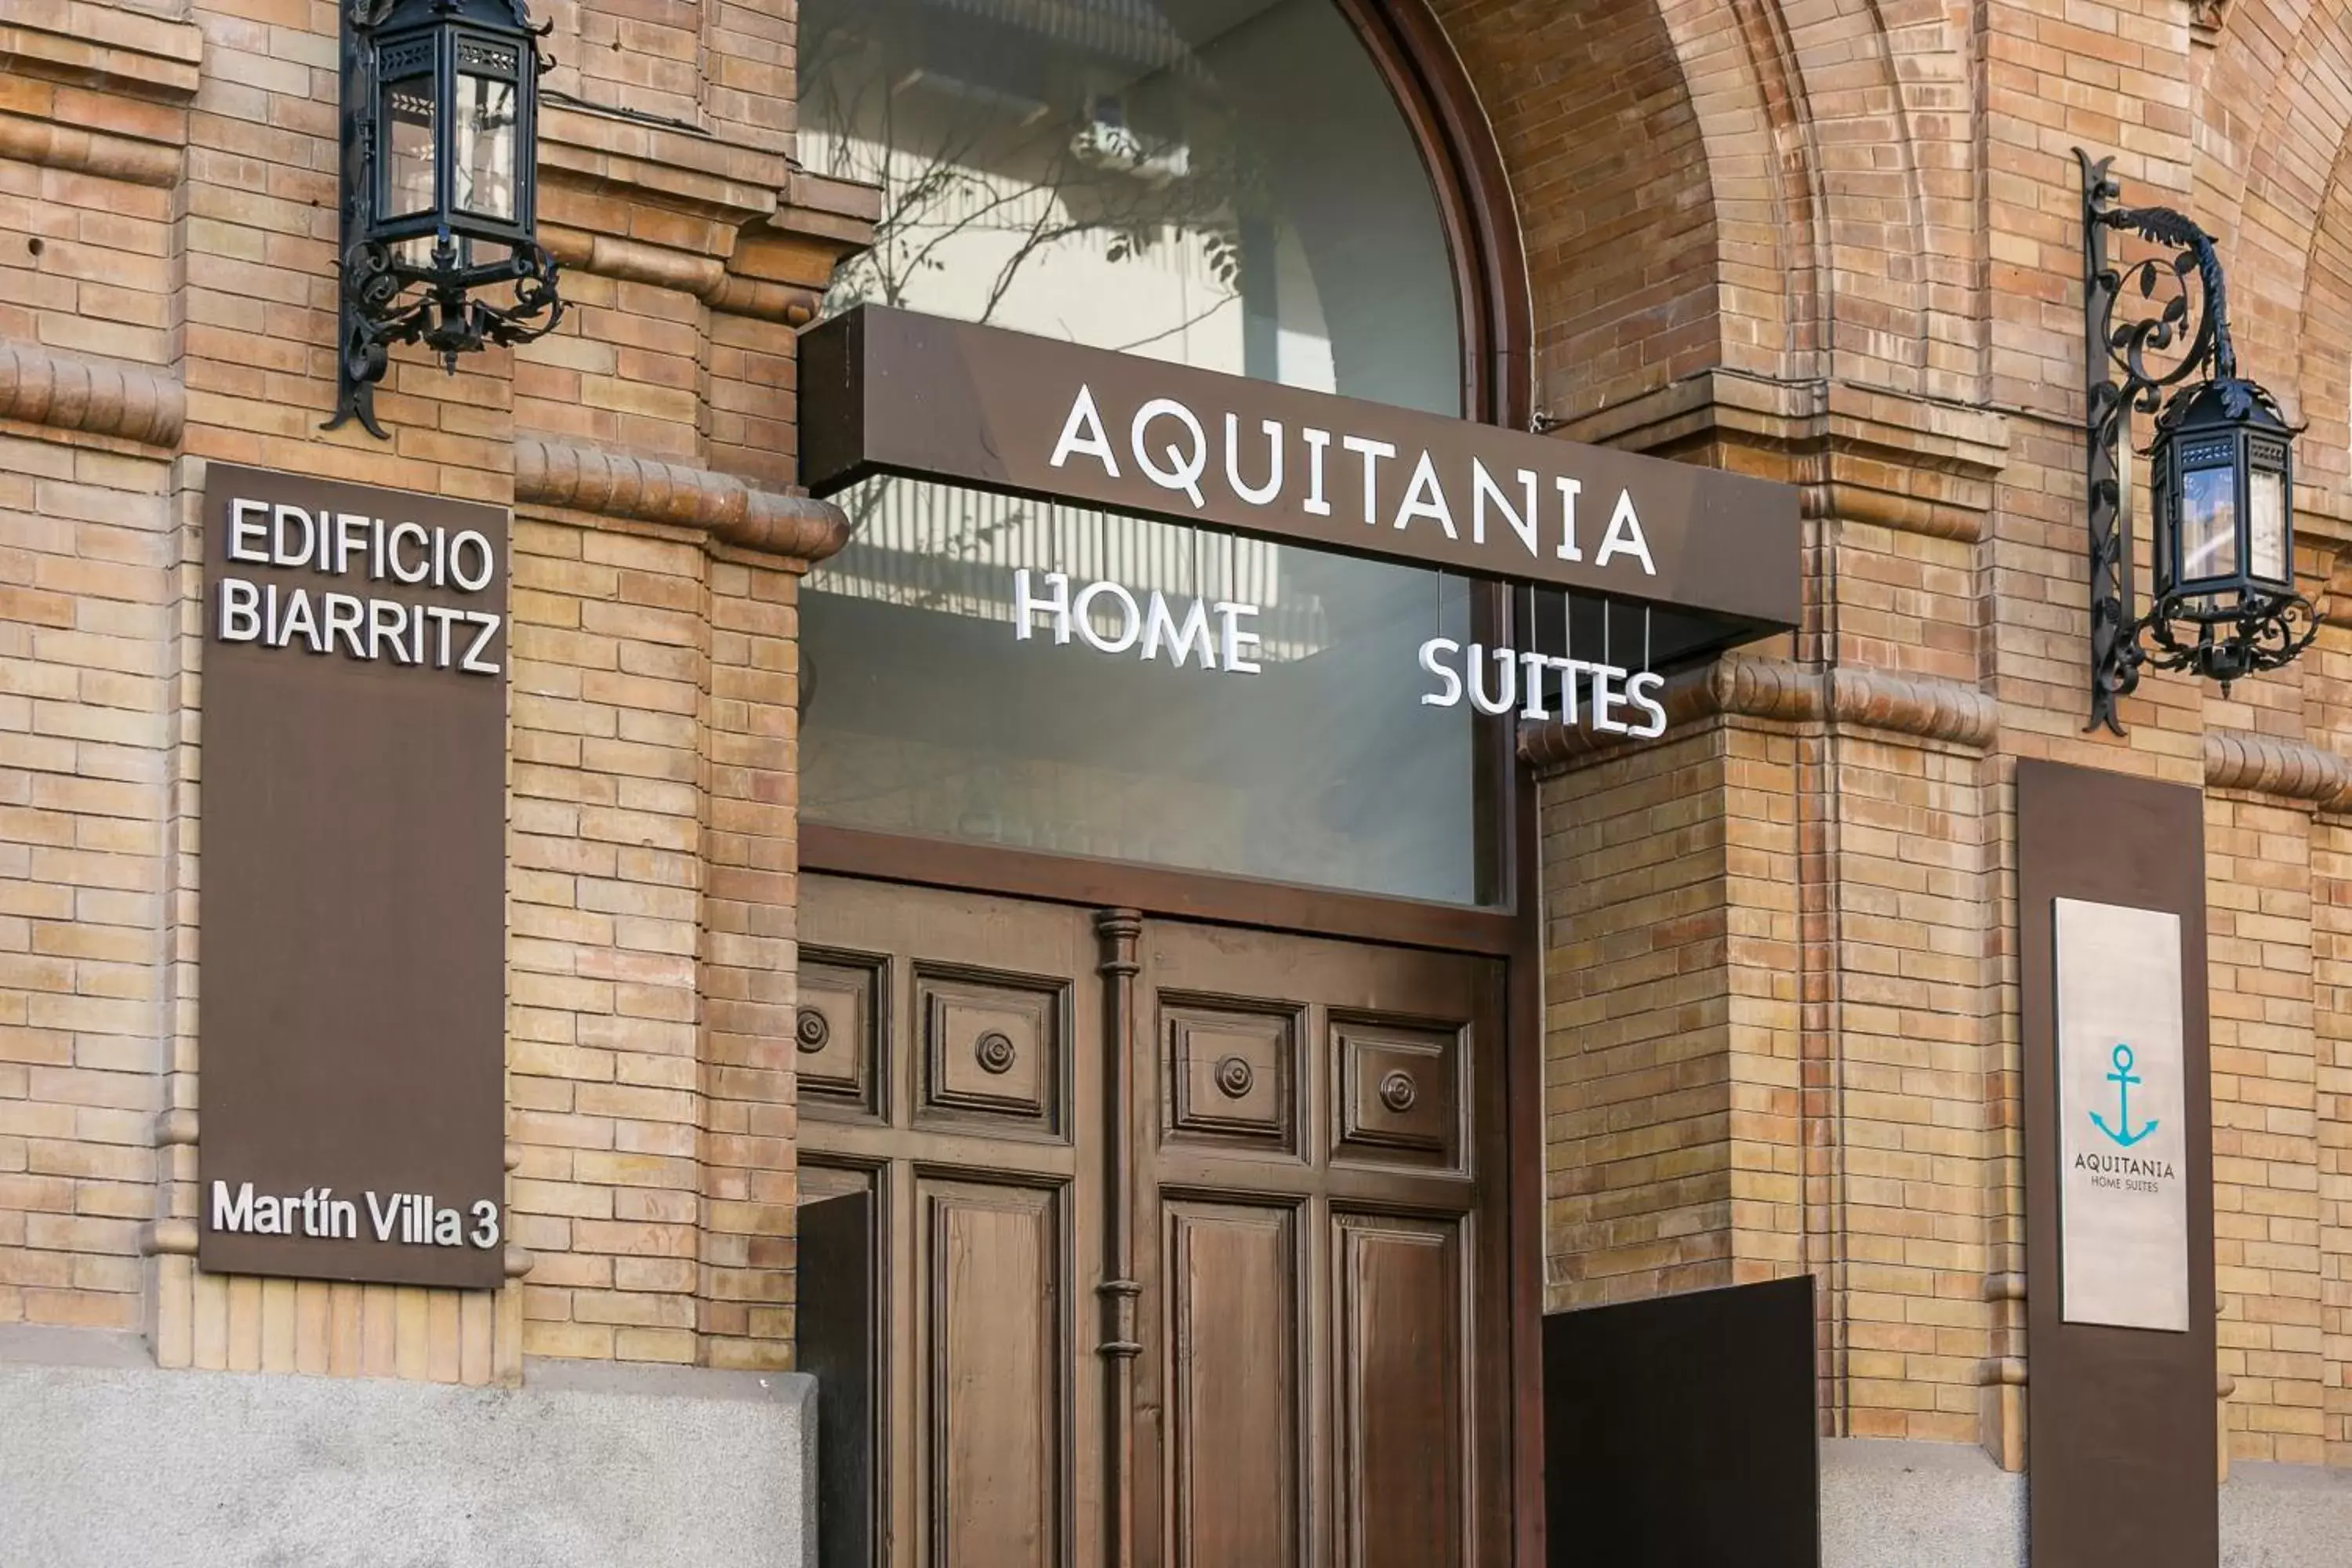 Facade/entrance in Aquitania Home Suites